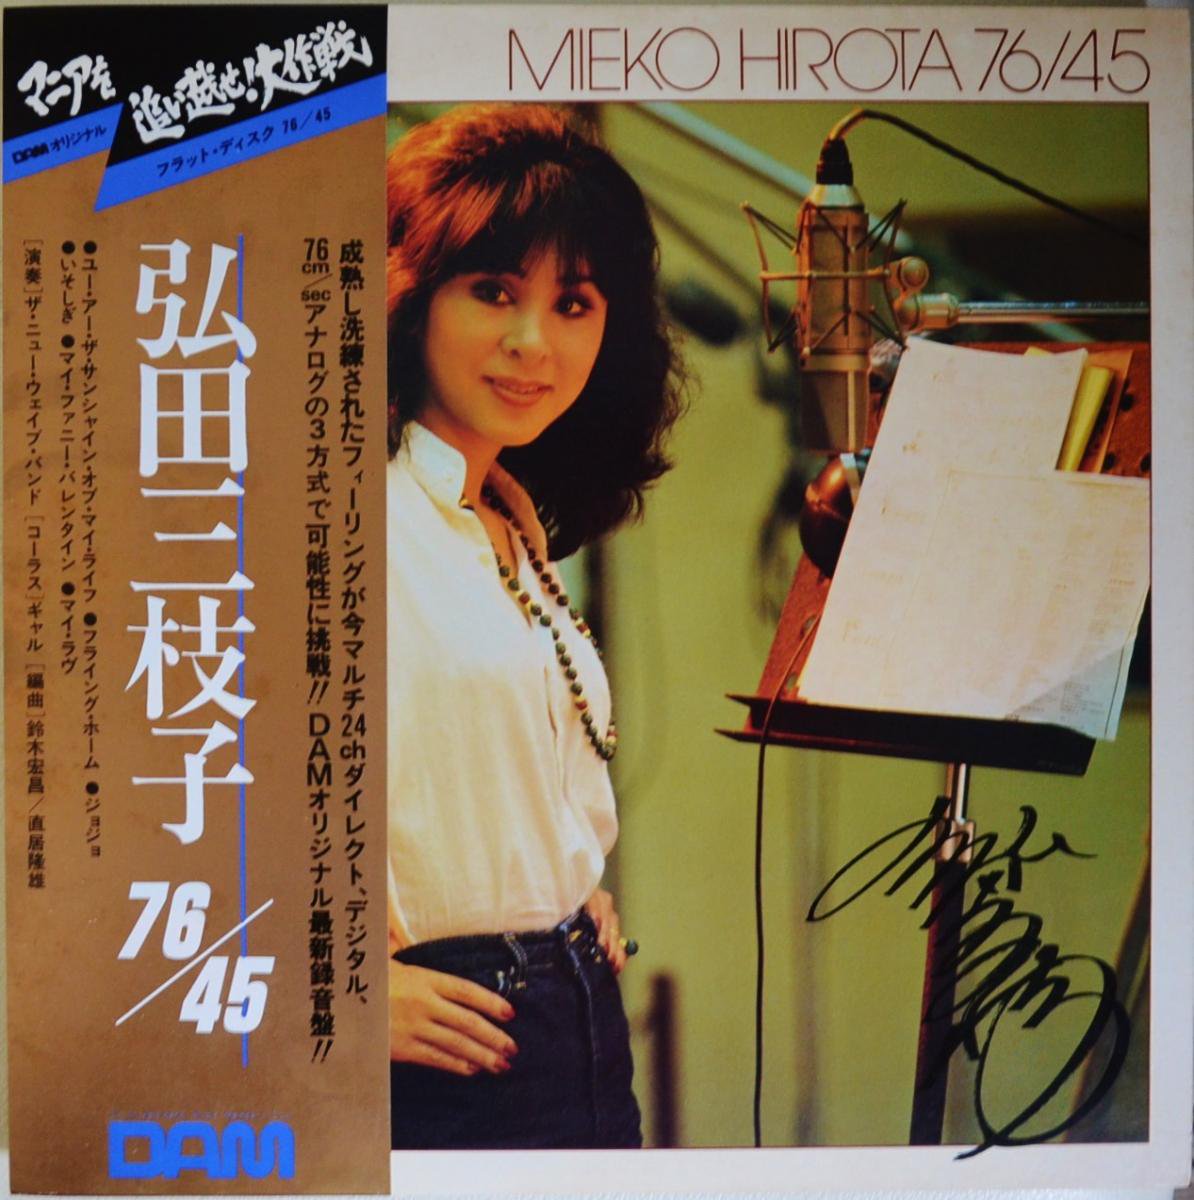 Ļ޻ MIEKO HIROTA / 76/45 (LP)